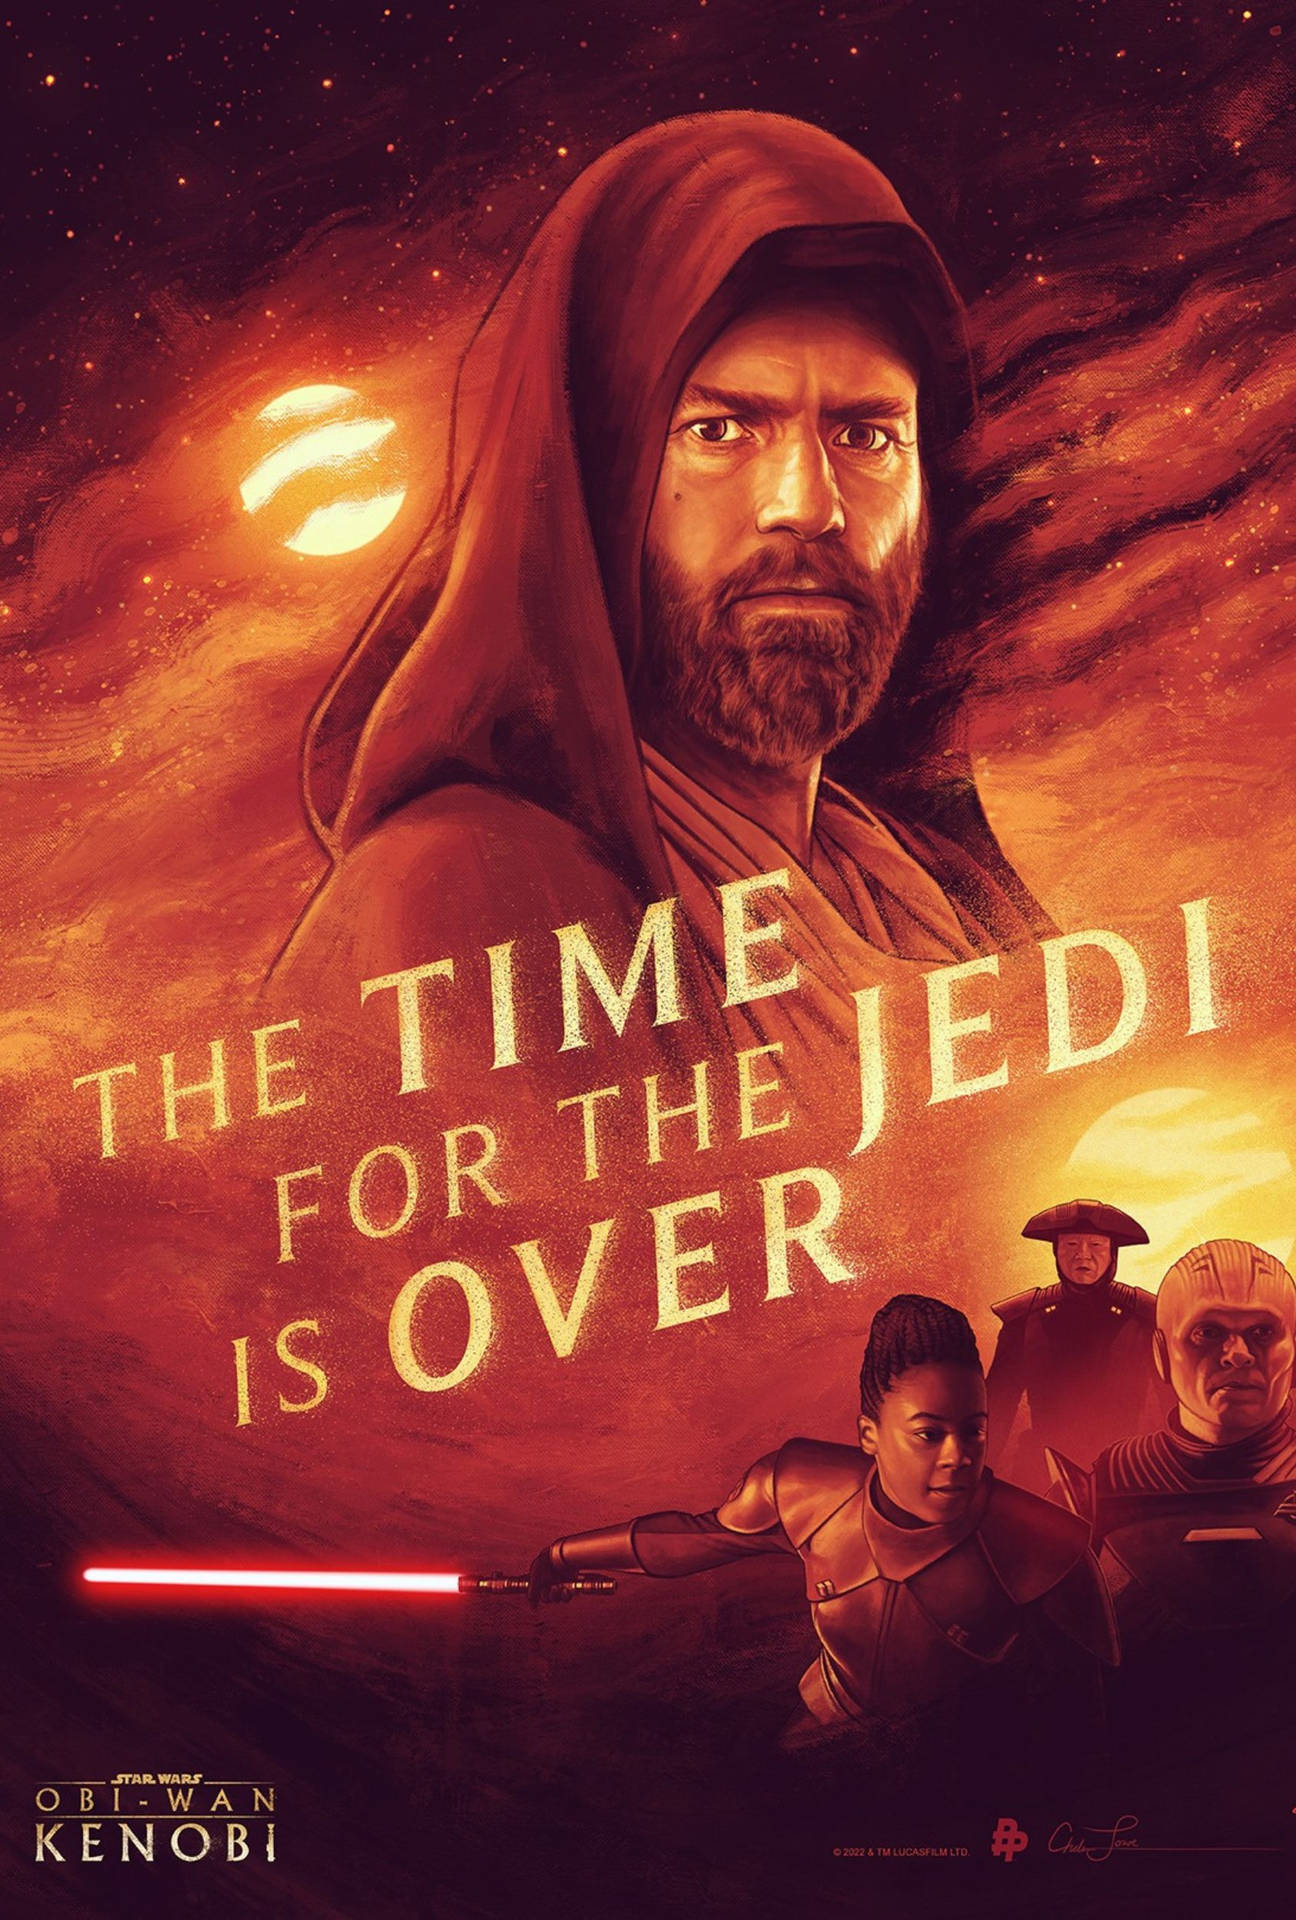 Obi Wan Kenobi Jedi Is Over Wallpaper